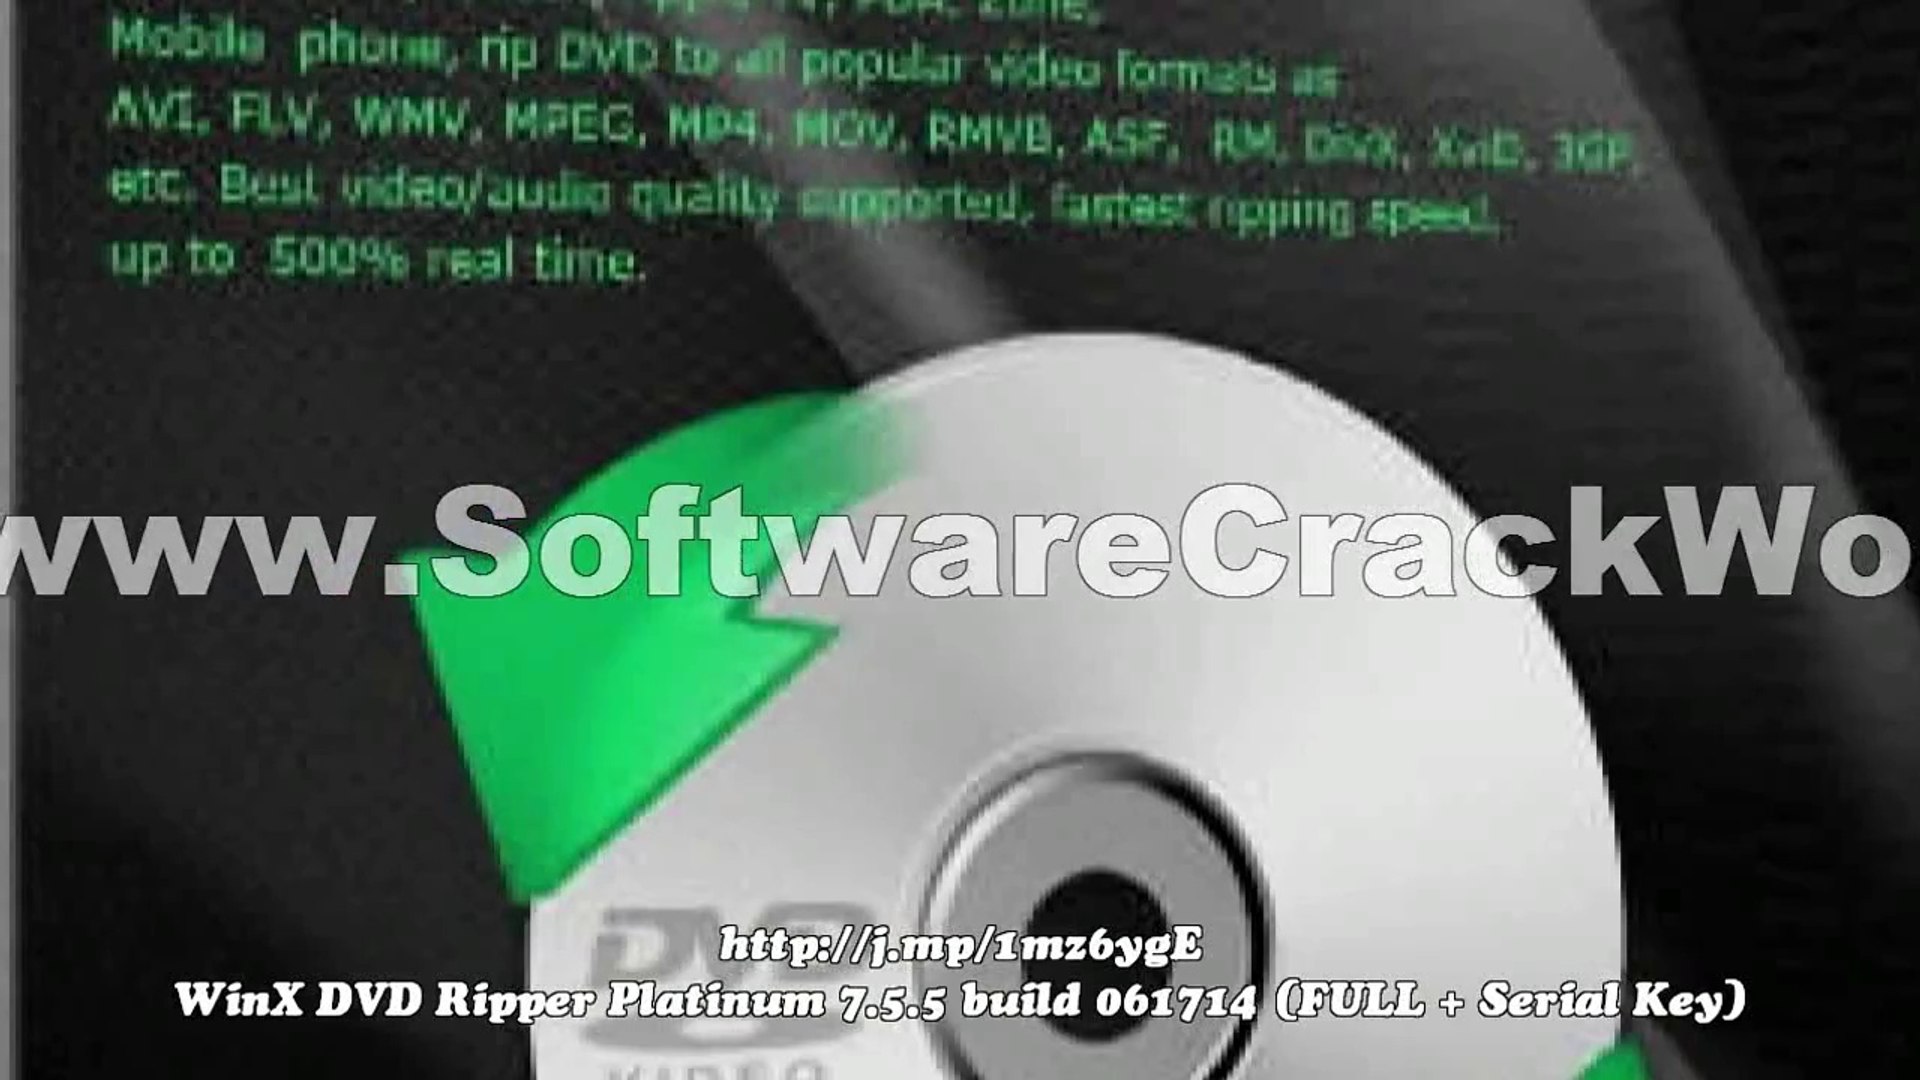 07-2014 NEW] (FULL + Serial Key) WinX DVD Ripper Platinum 7.5.5 build  061714 - video Dailymotion